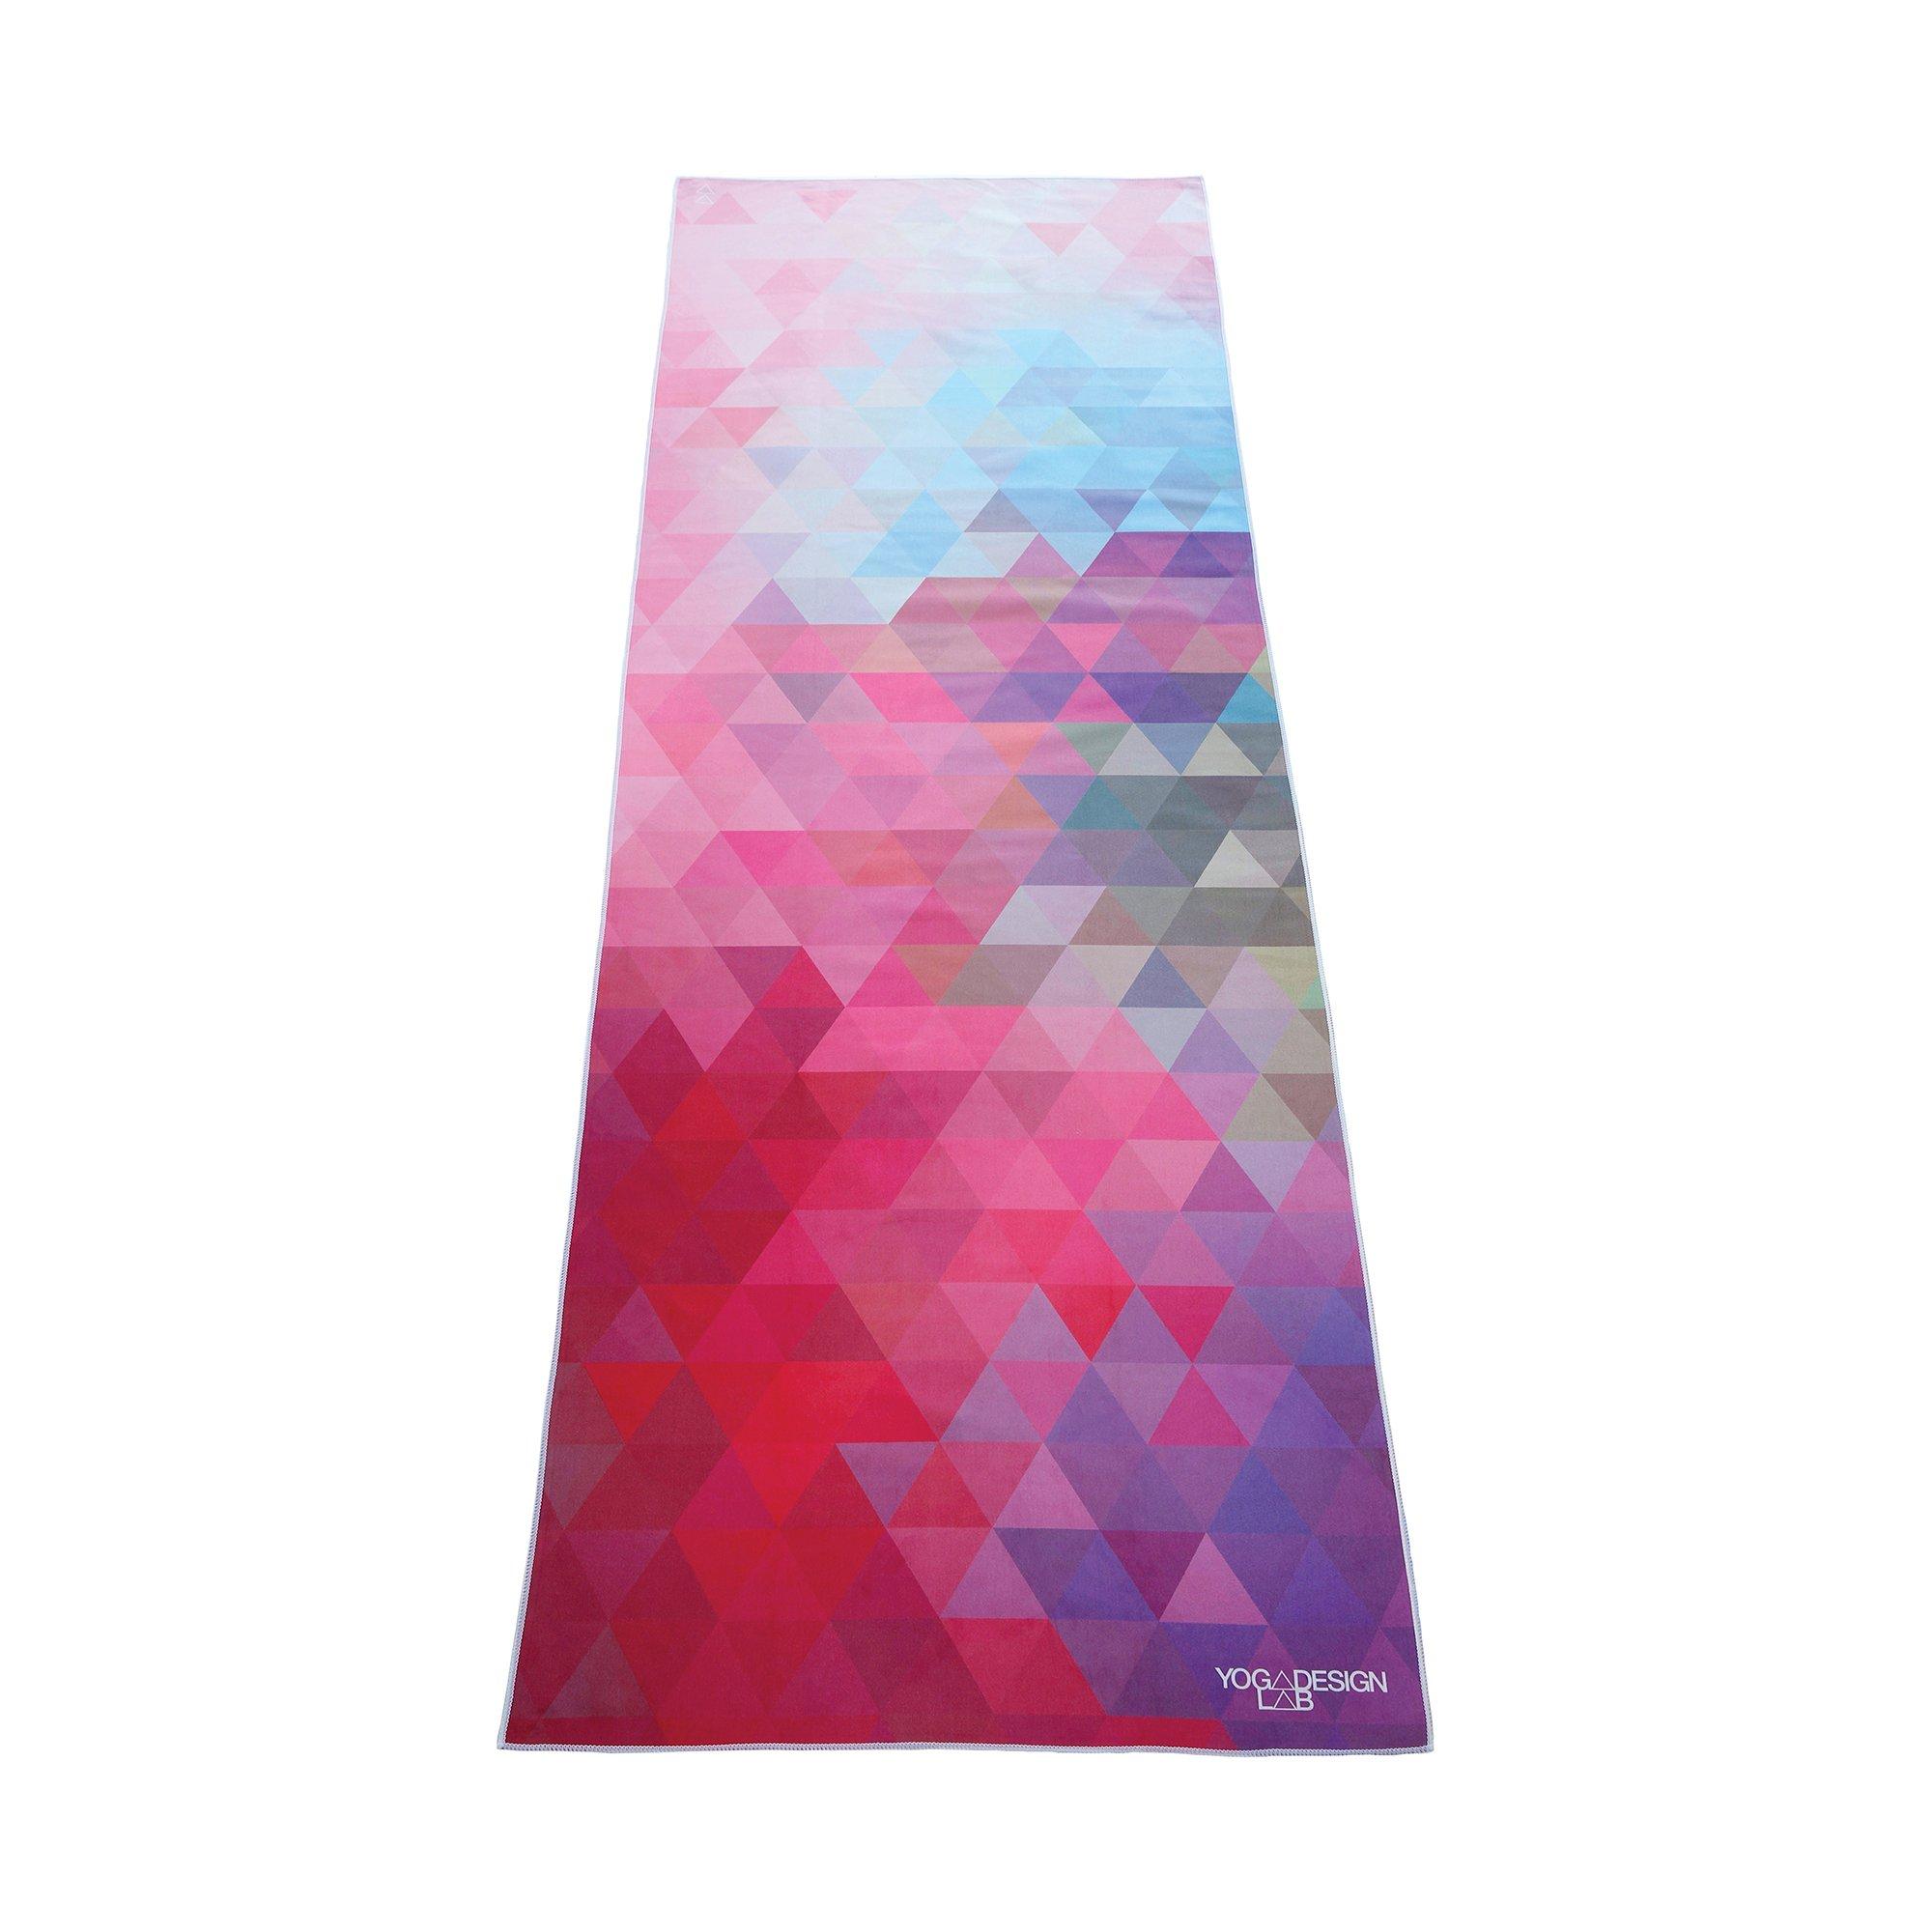 Image of Yoga Design Lab Mat Yoga Towel Yoga Handtuch - 182X61CM